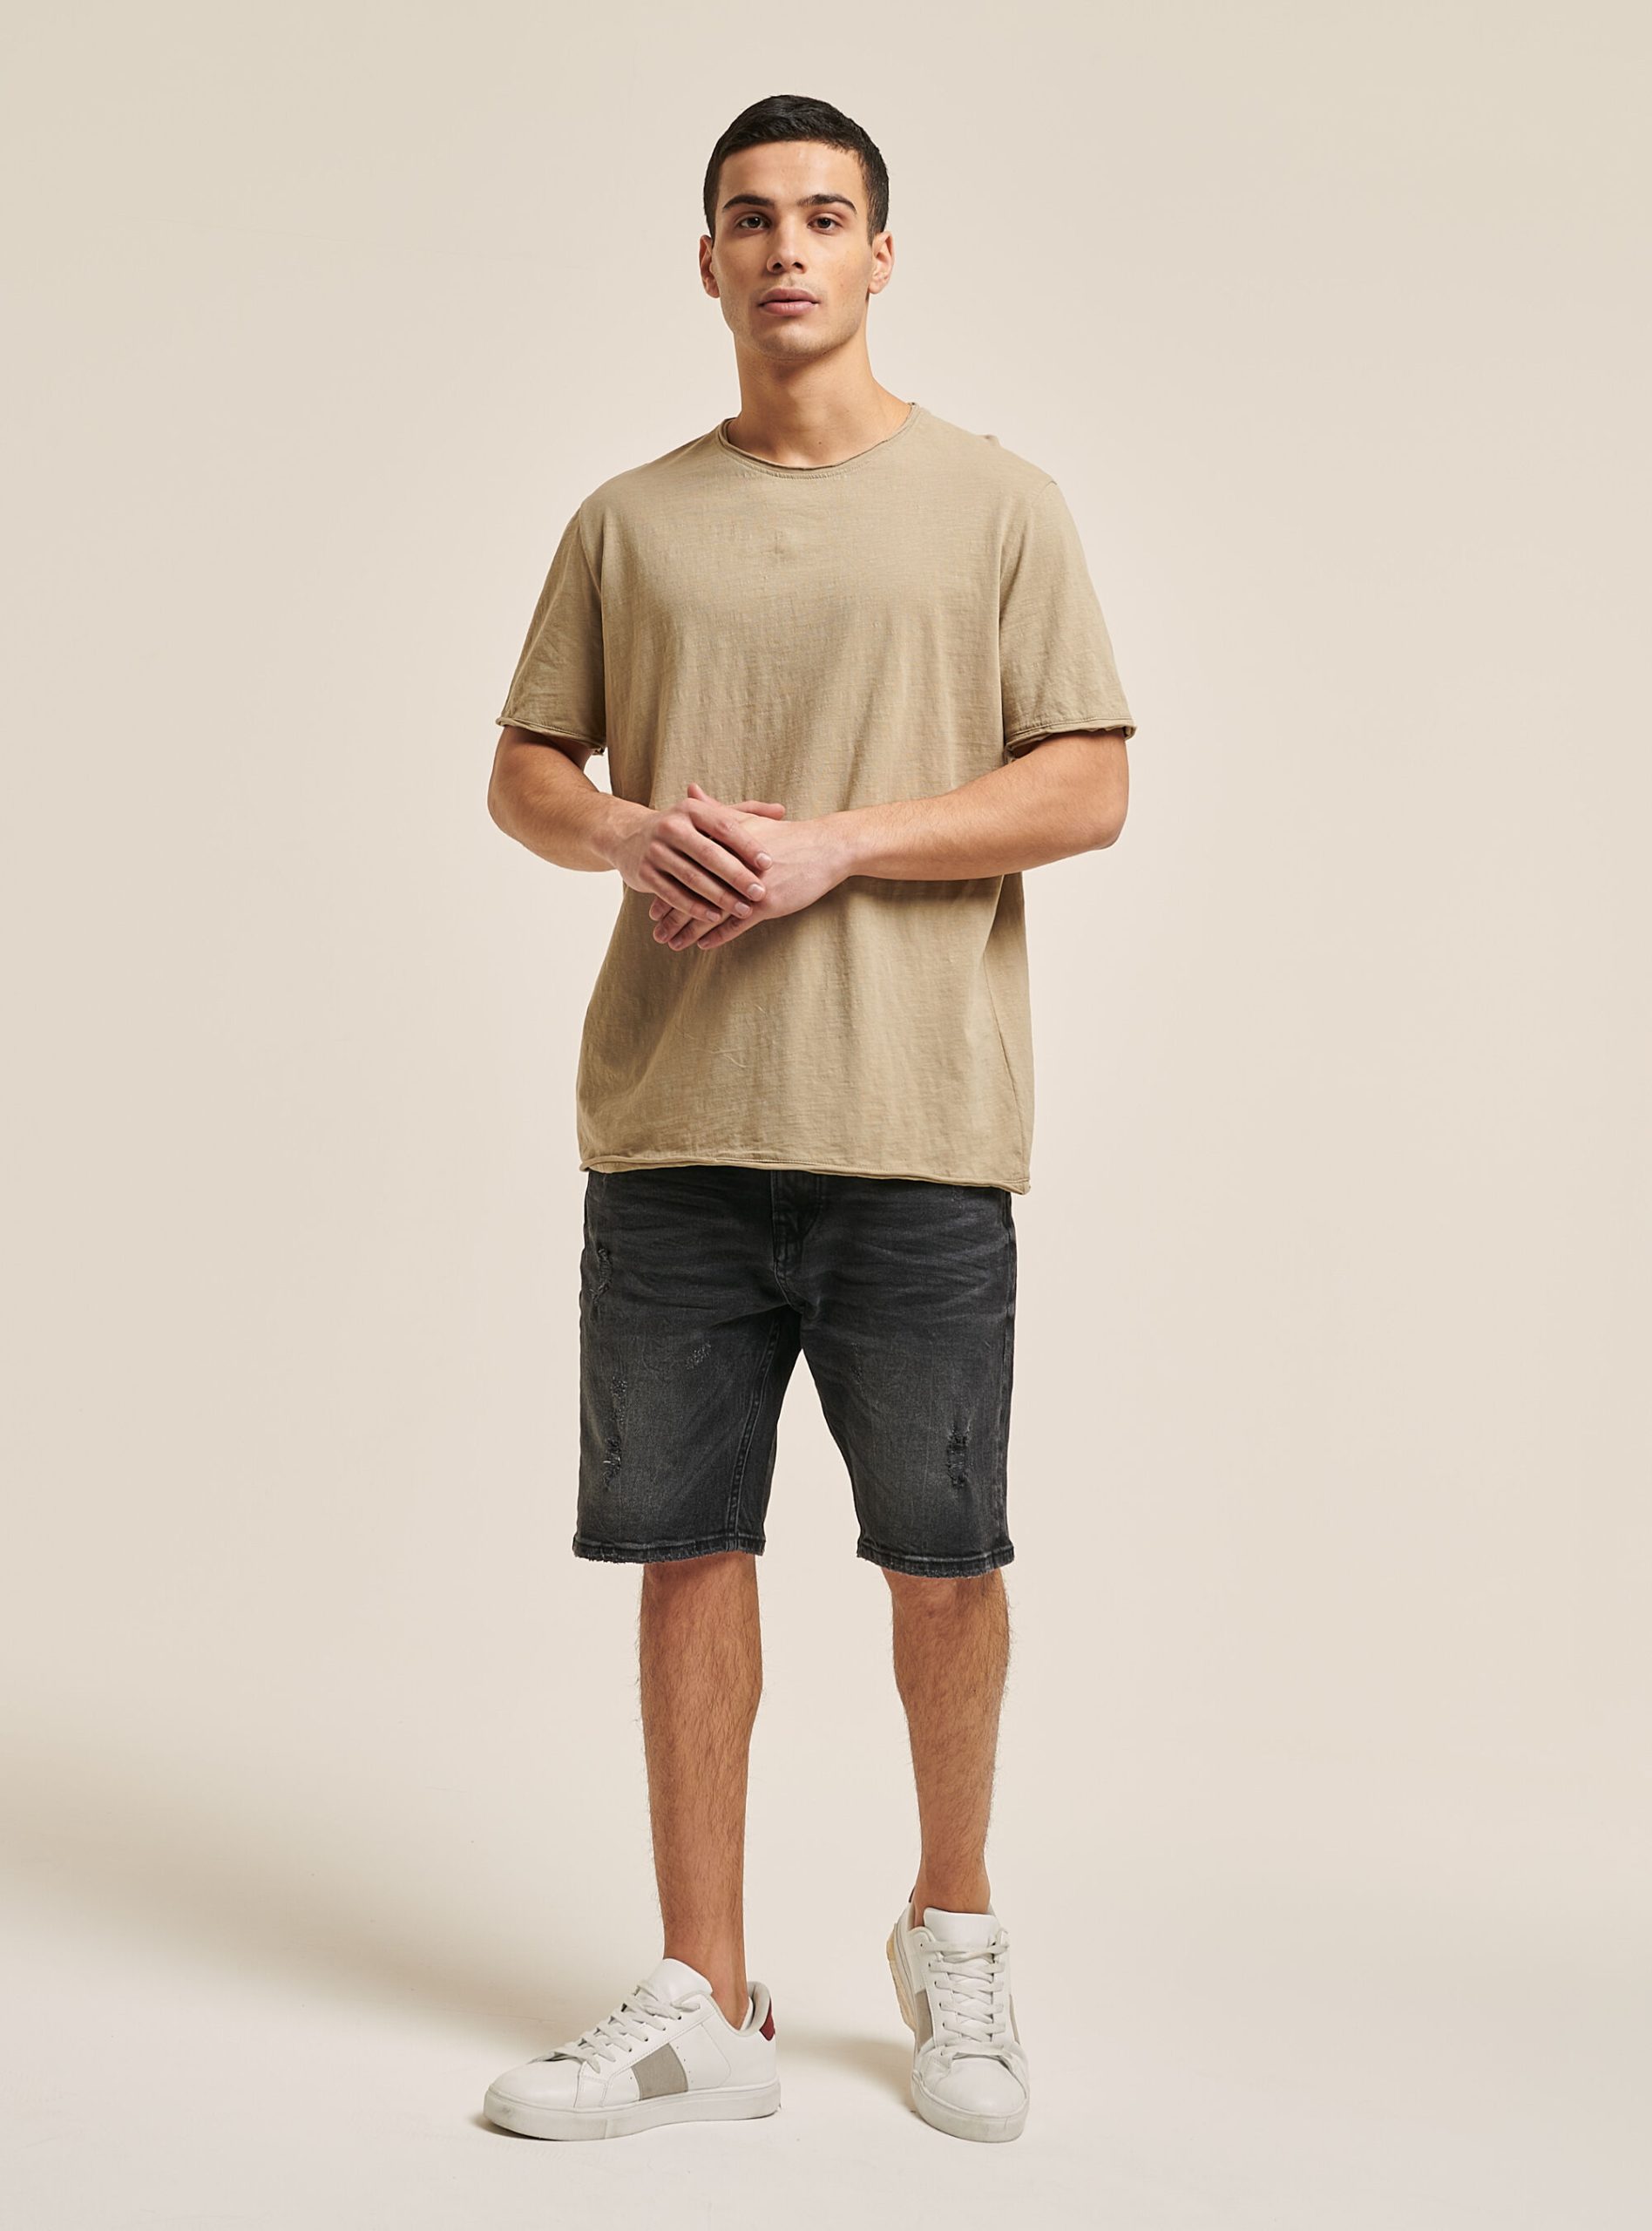 Einfarbiges T-Shirt Aus Baumwolle Alcott Männer Promotion T-Shirts C1150 Sand – 2